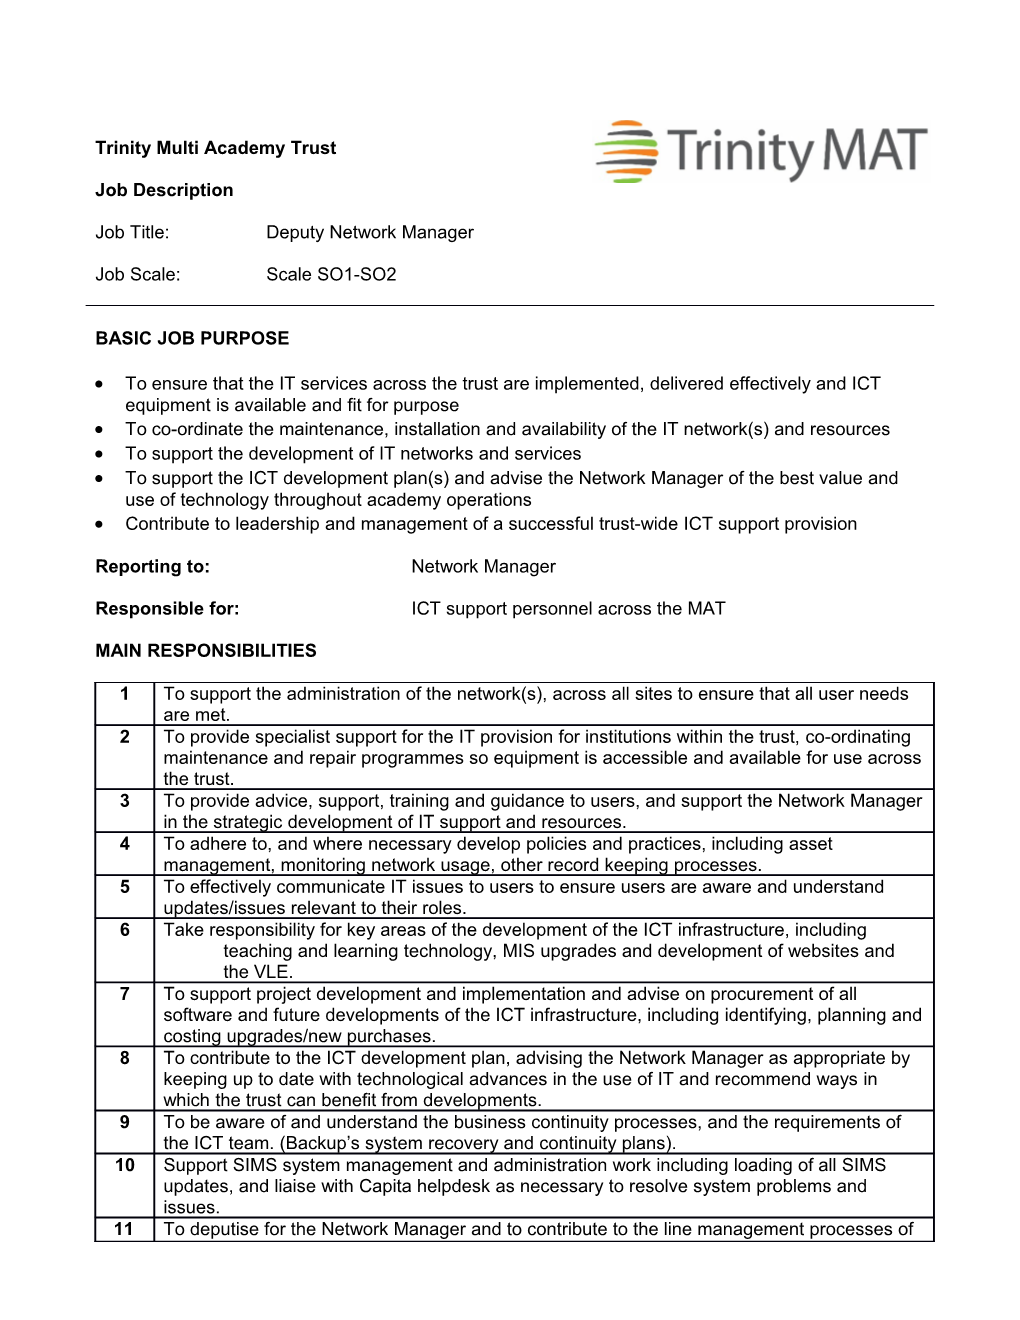 Trinity Multi Academy Trust Job Description